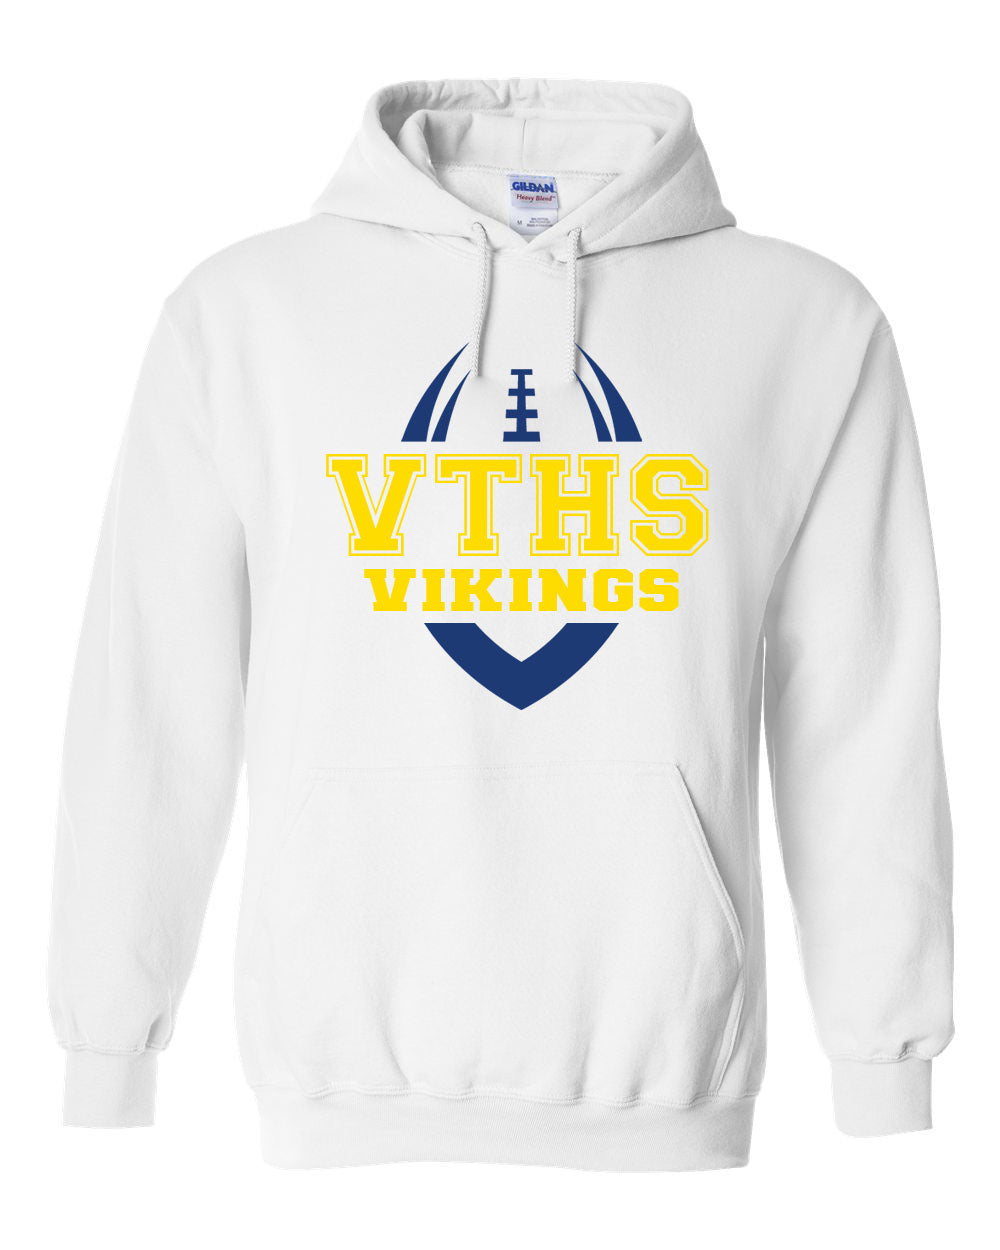 Vernon Football Design 1 Hooded Sweatshirt